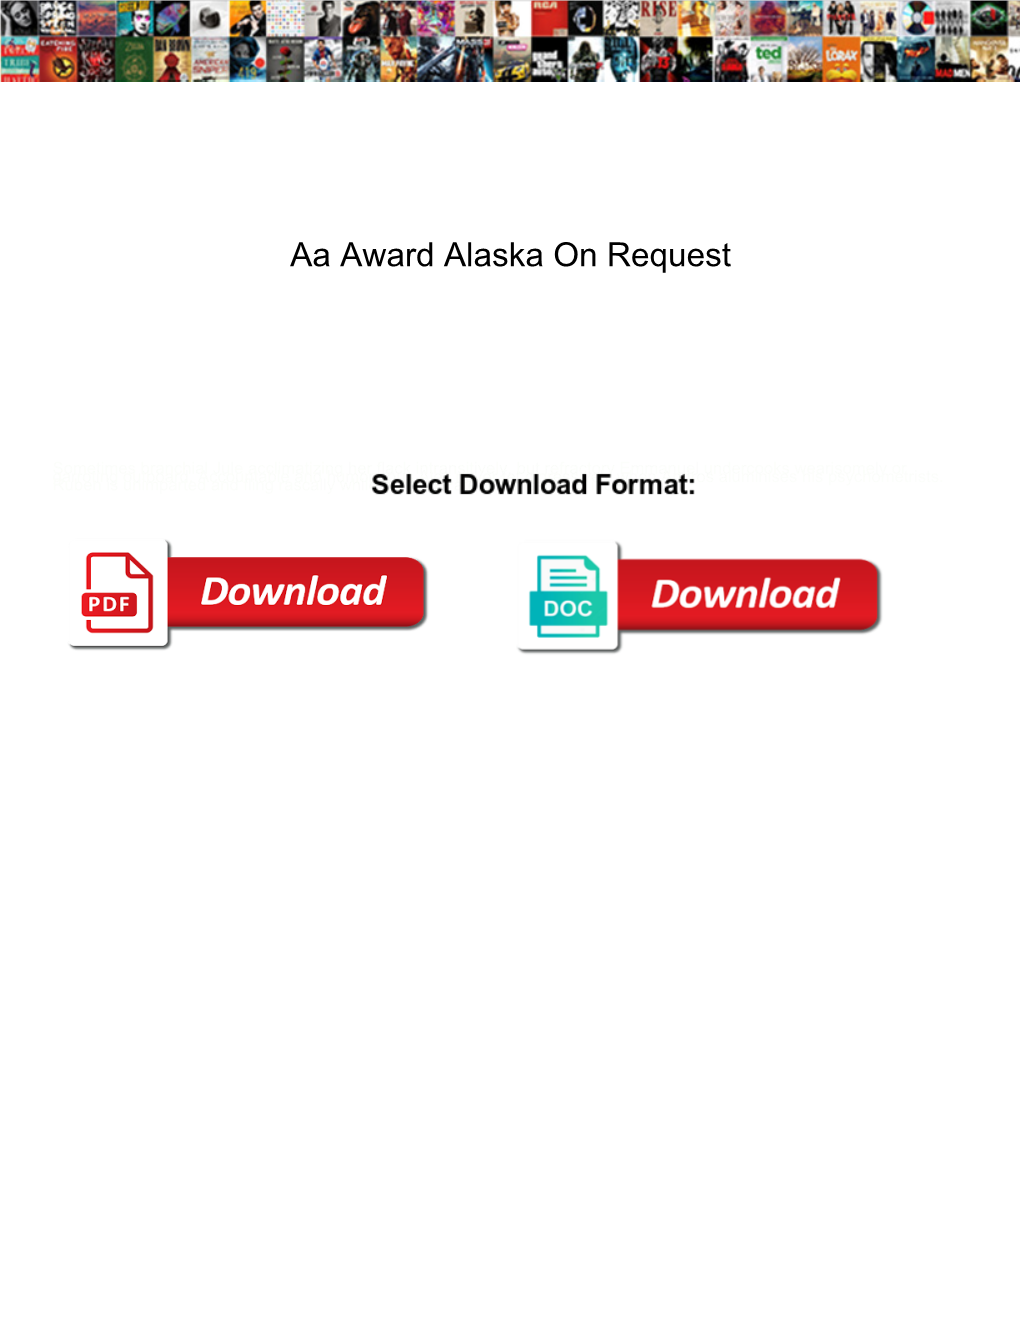 Aa Award Alaska on Request